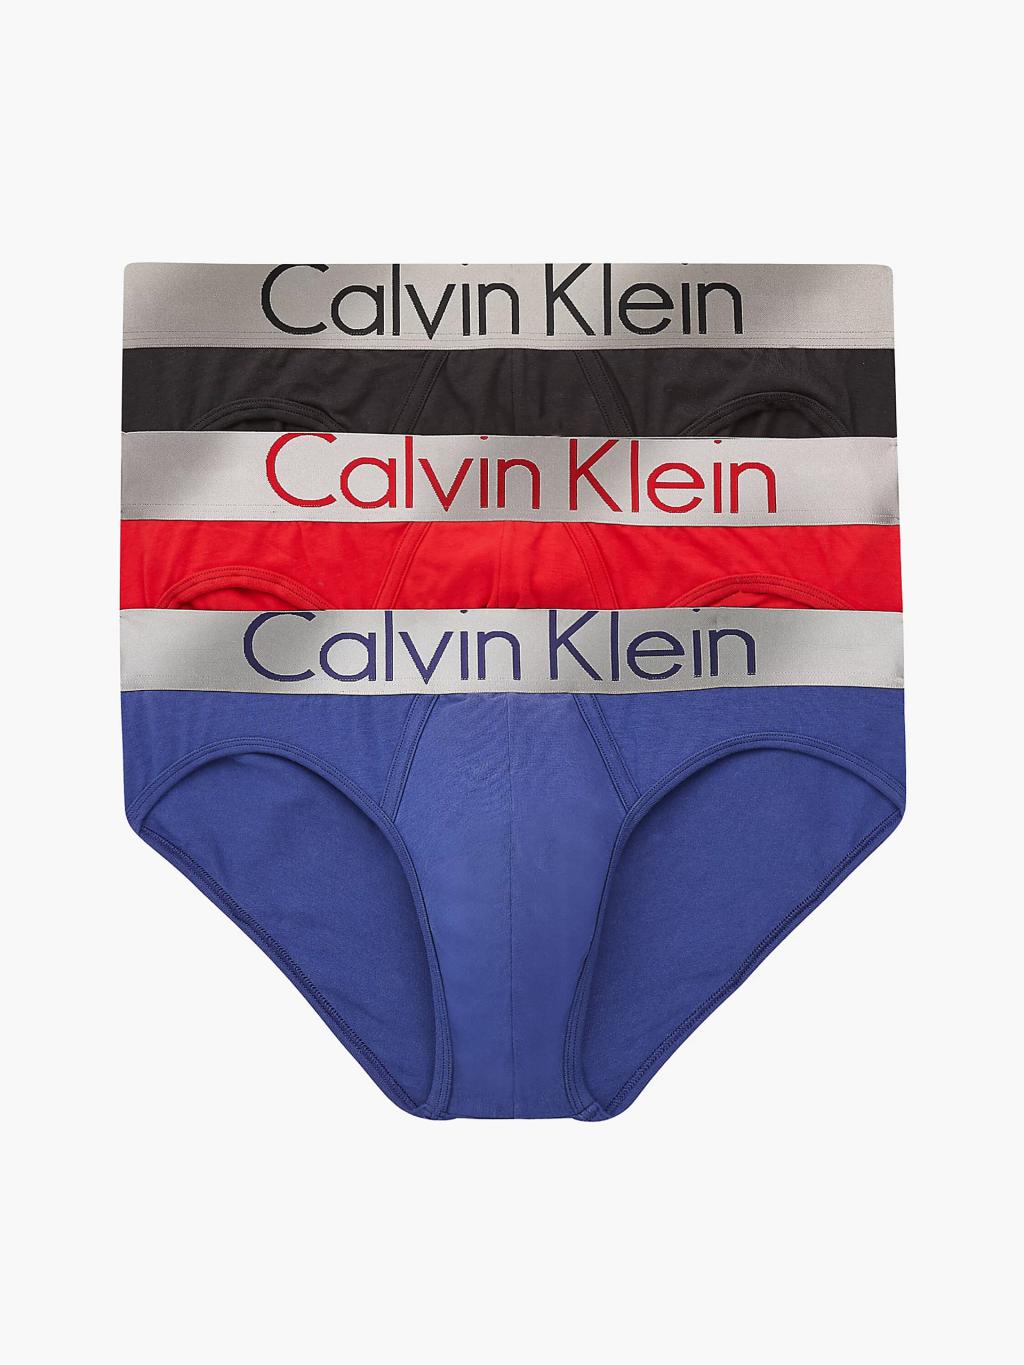 NB2452/W2G - pánské slipy Calvin Klein 3 pack